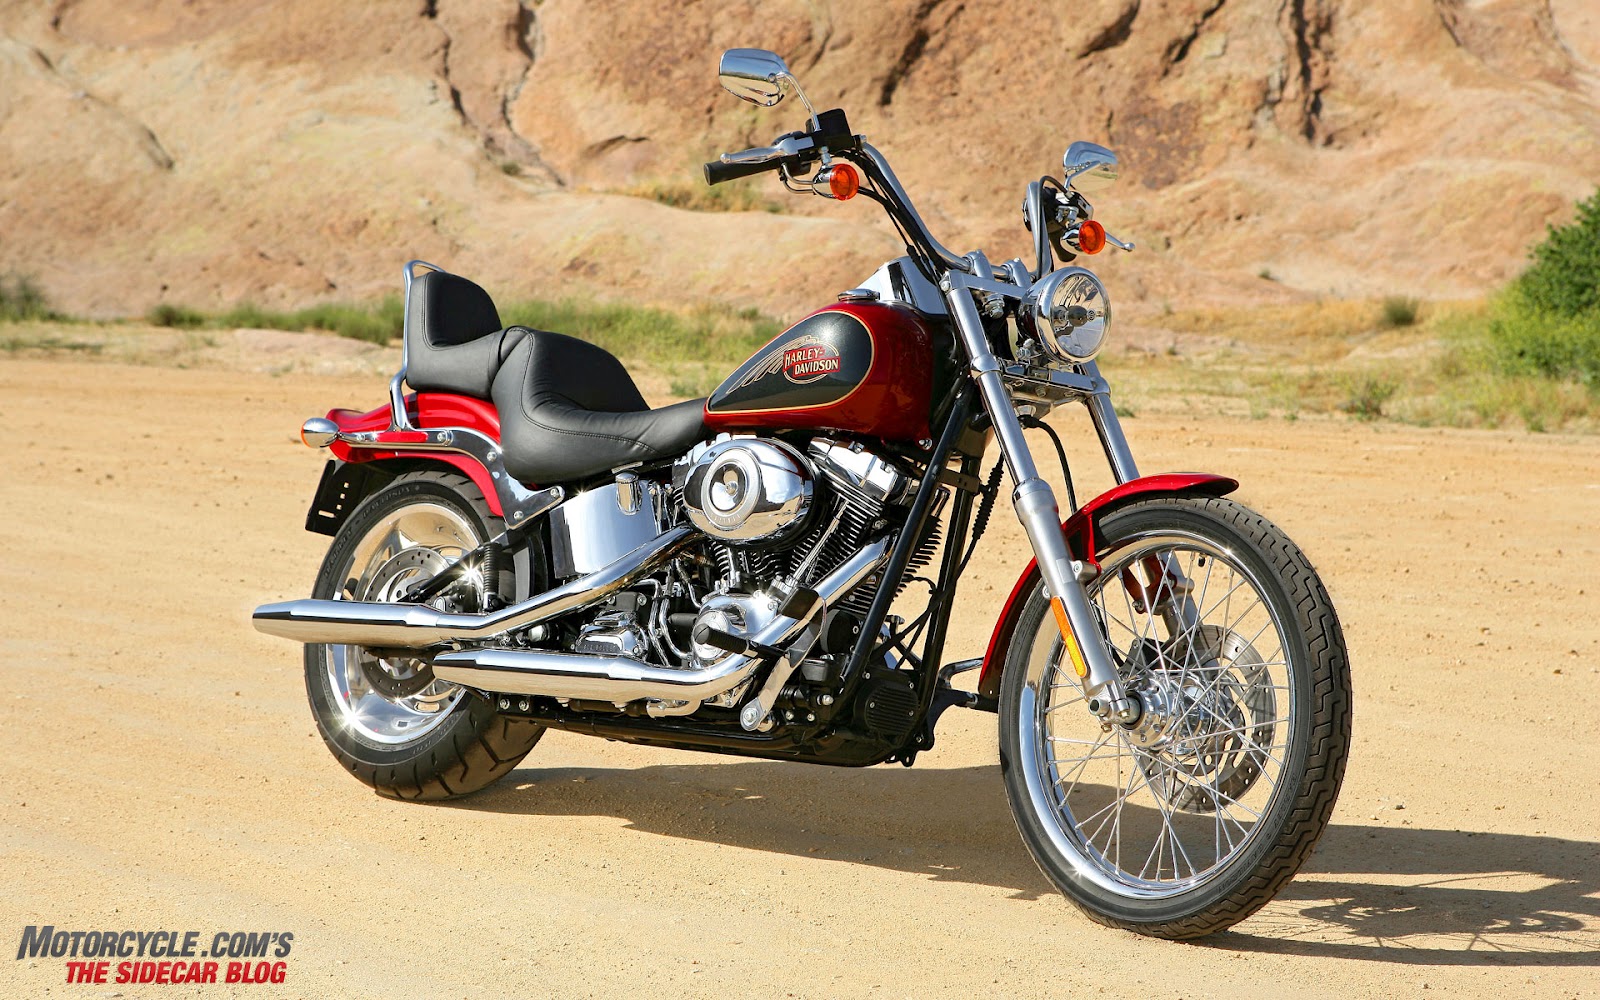 Harley Davidson Motorcycle Desktop Background